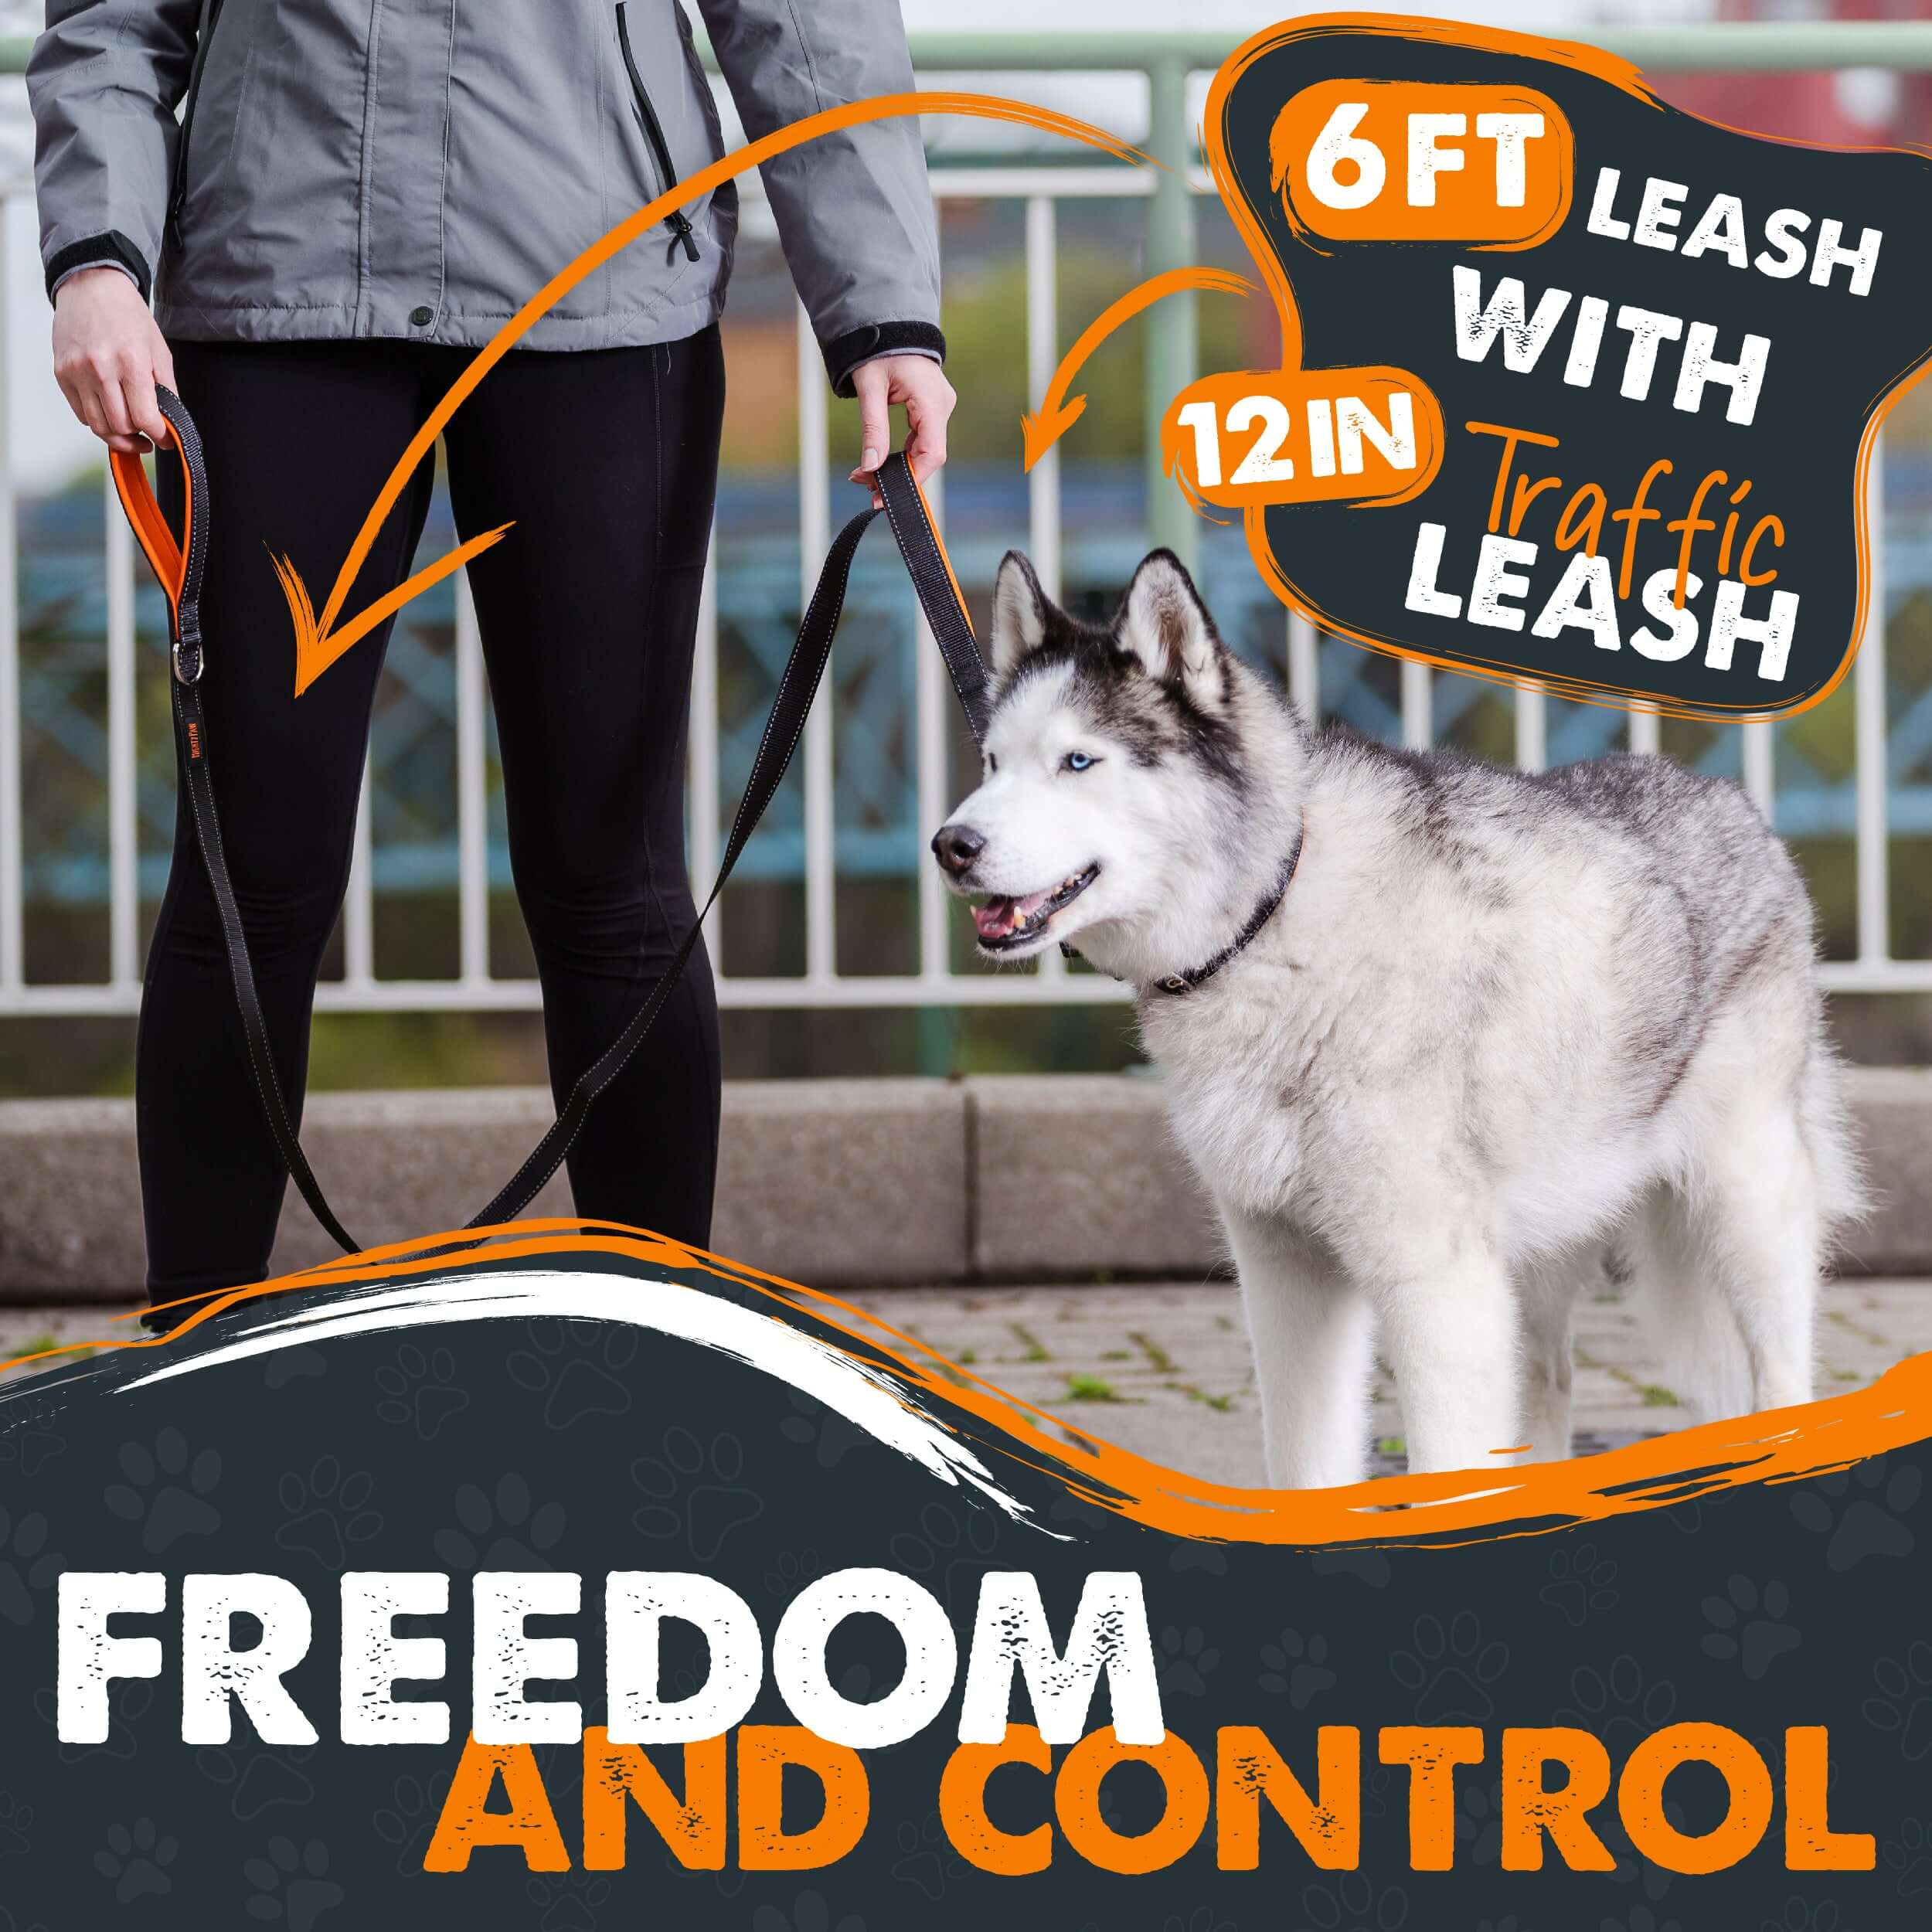 Dual Handle Dog Leash 2.0 - HandleX2 for Maximum Control